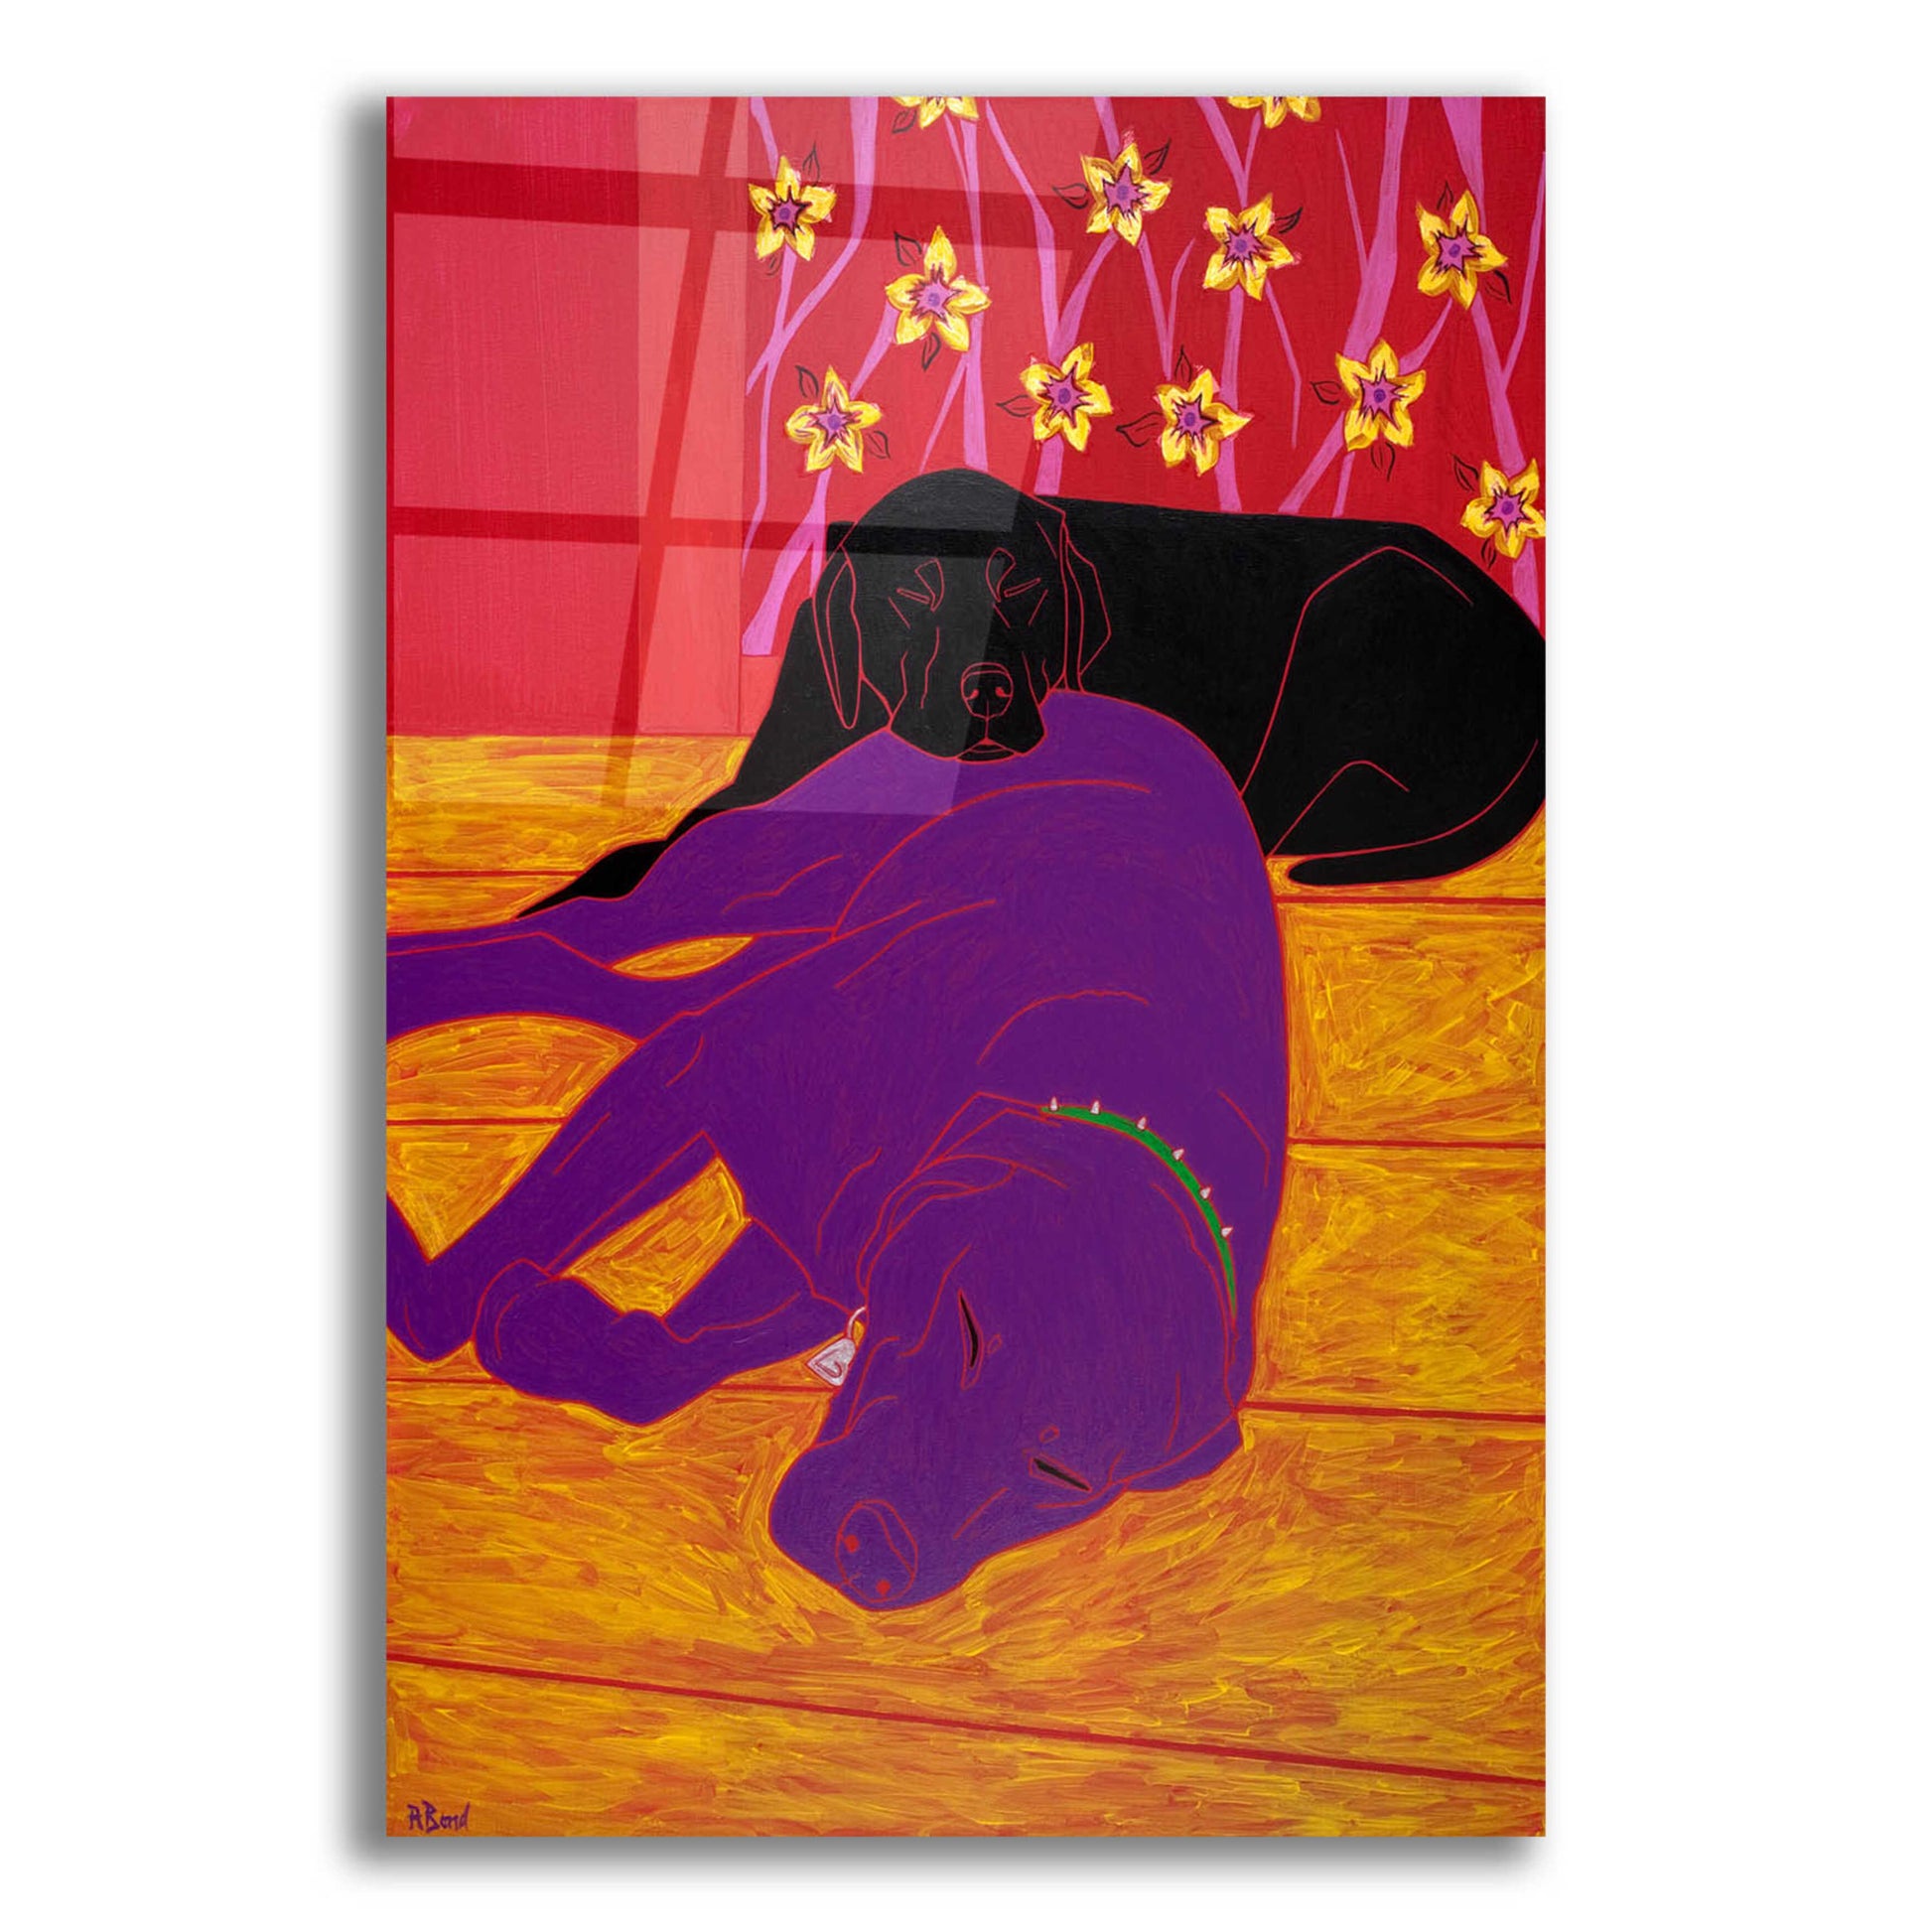 Epic Art 'Let Sleeping Dogs Lie' by Angela Bond Acrylic Glass Wall Art,16x24